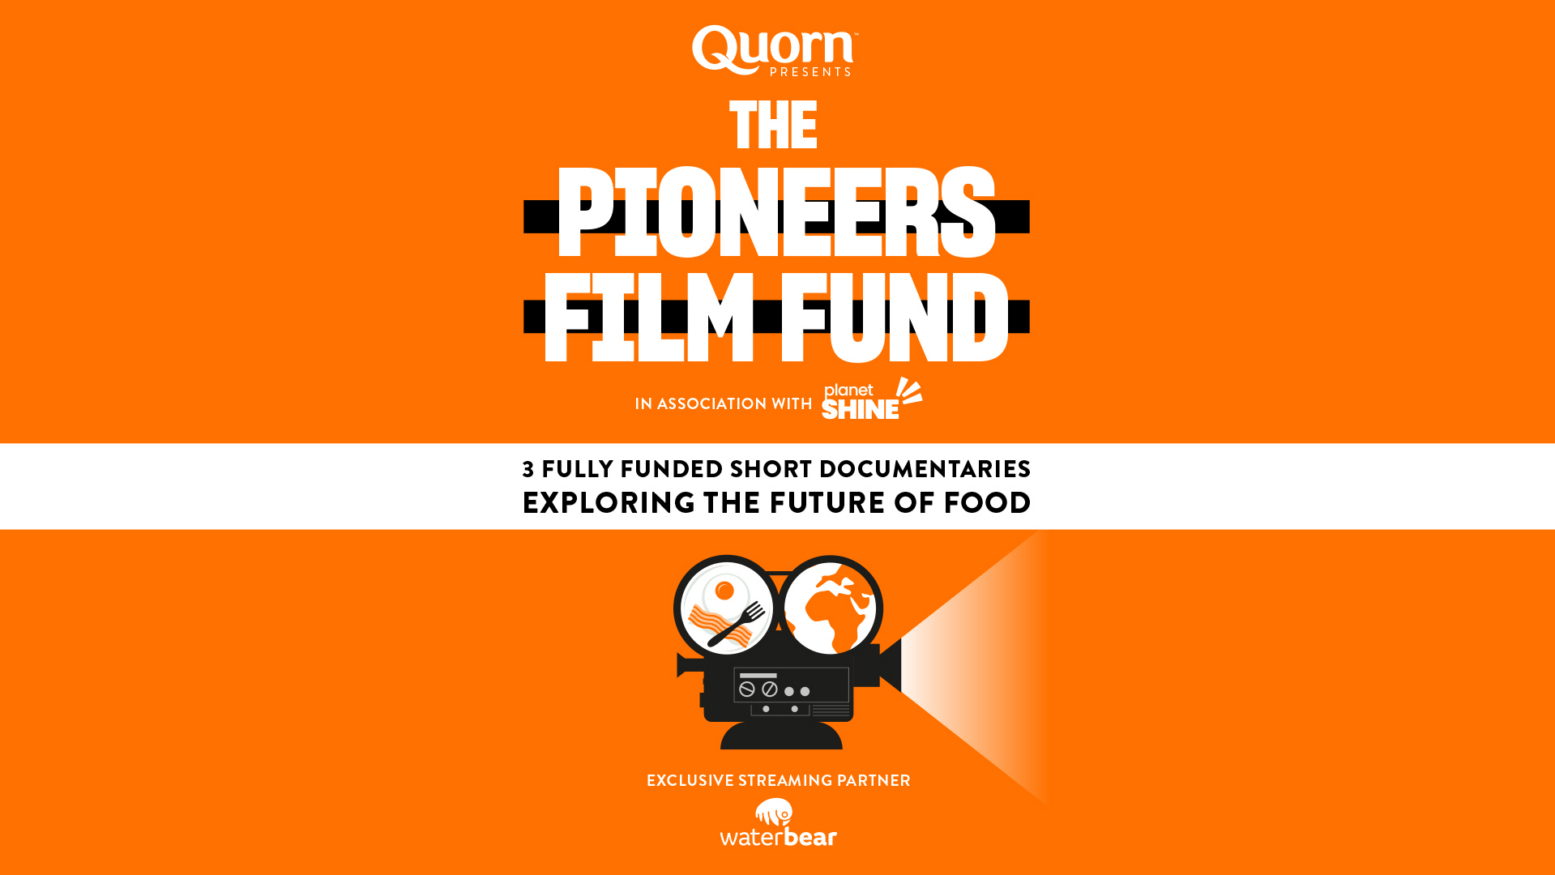 The Pioneers Film Fund